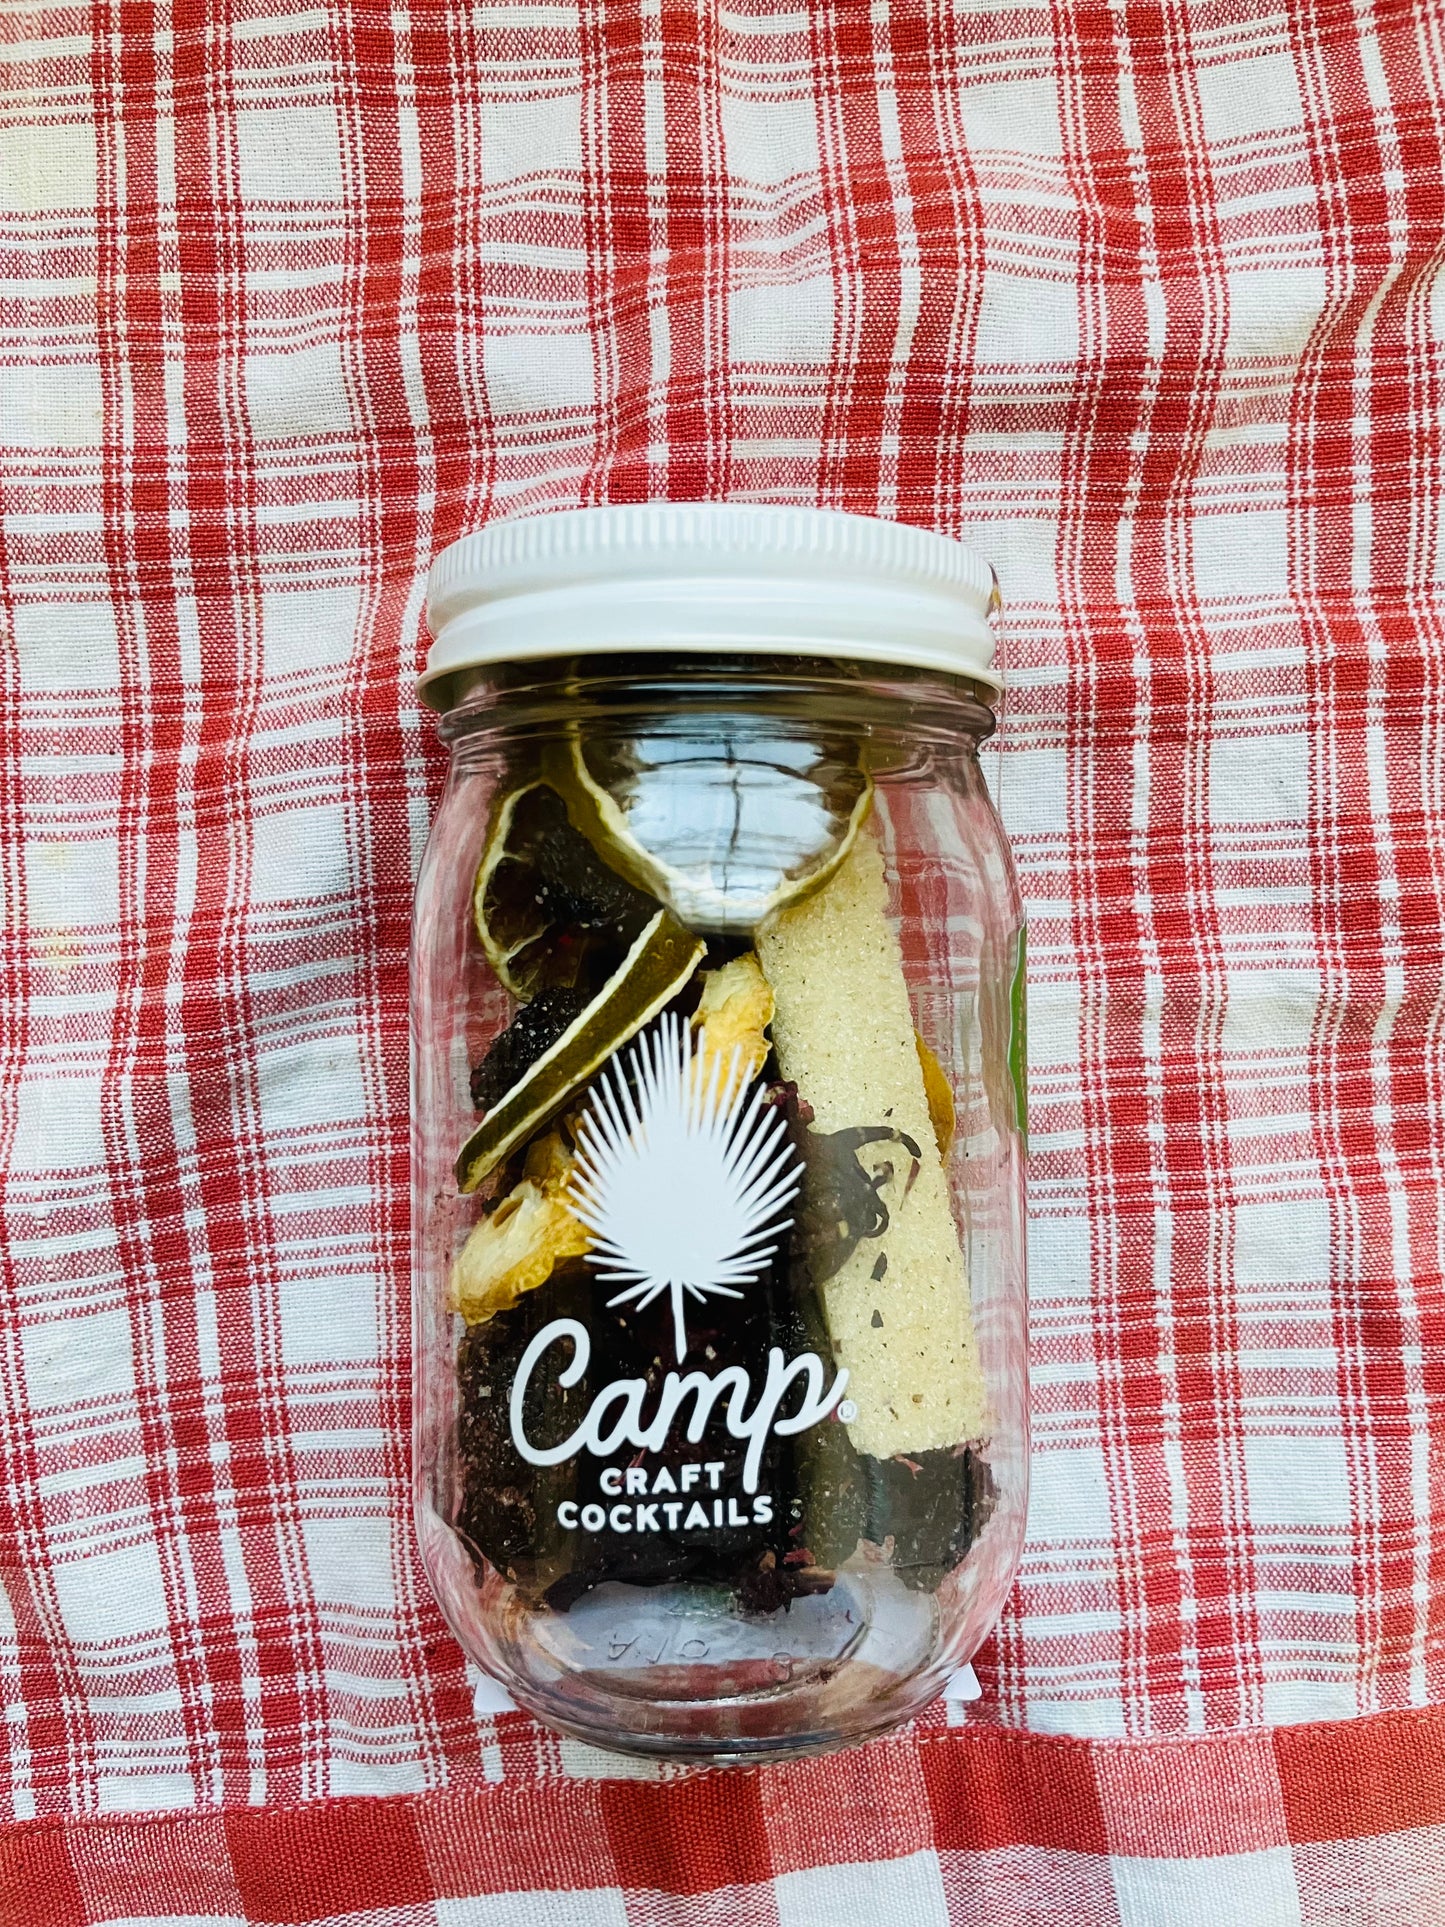 Cherry Limeade- Camp Craft Cocktails